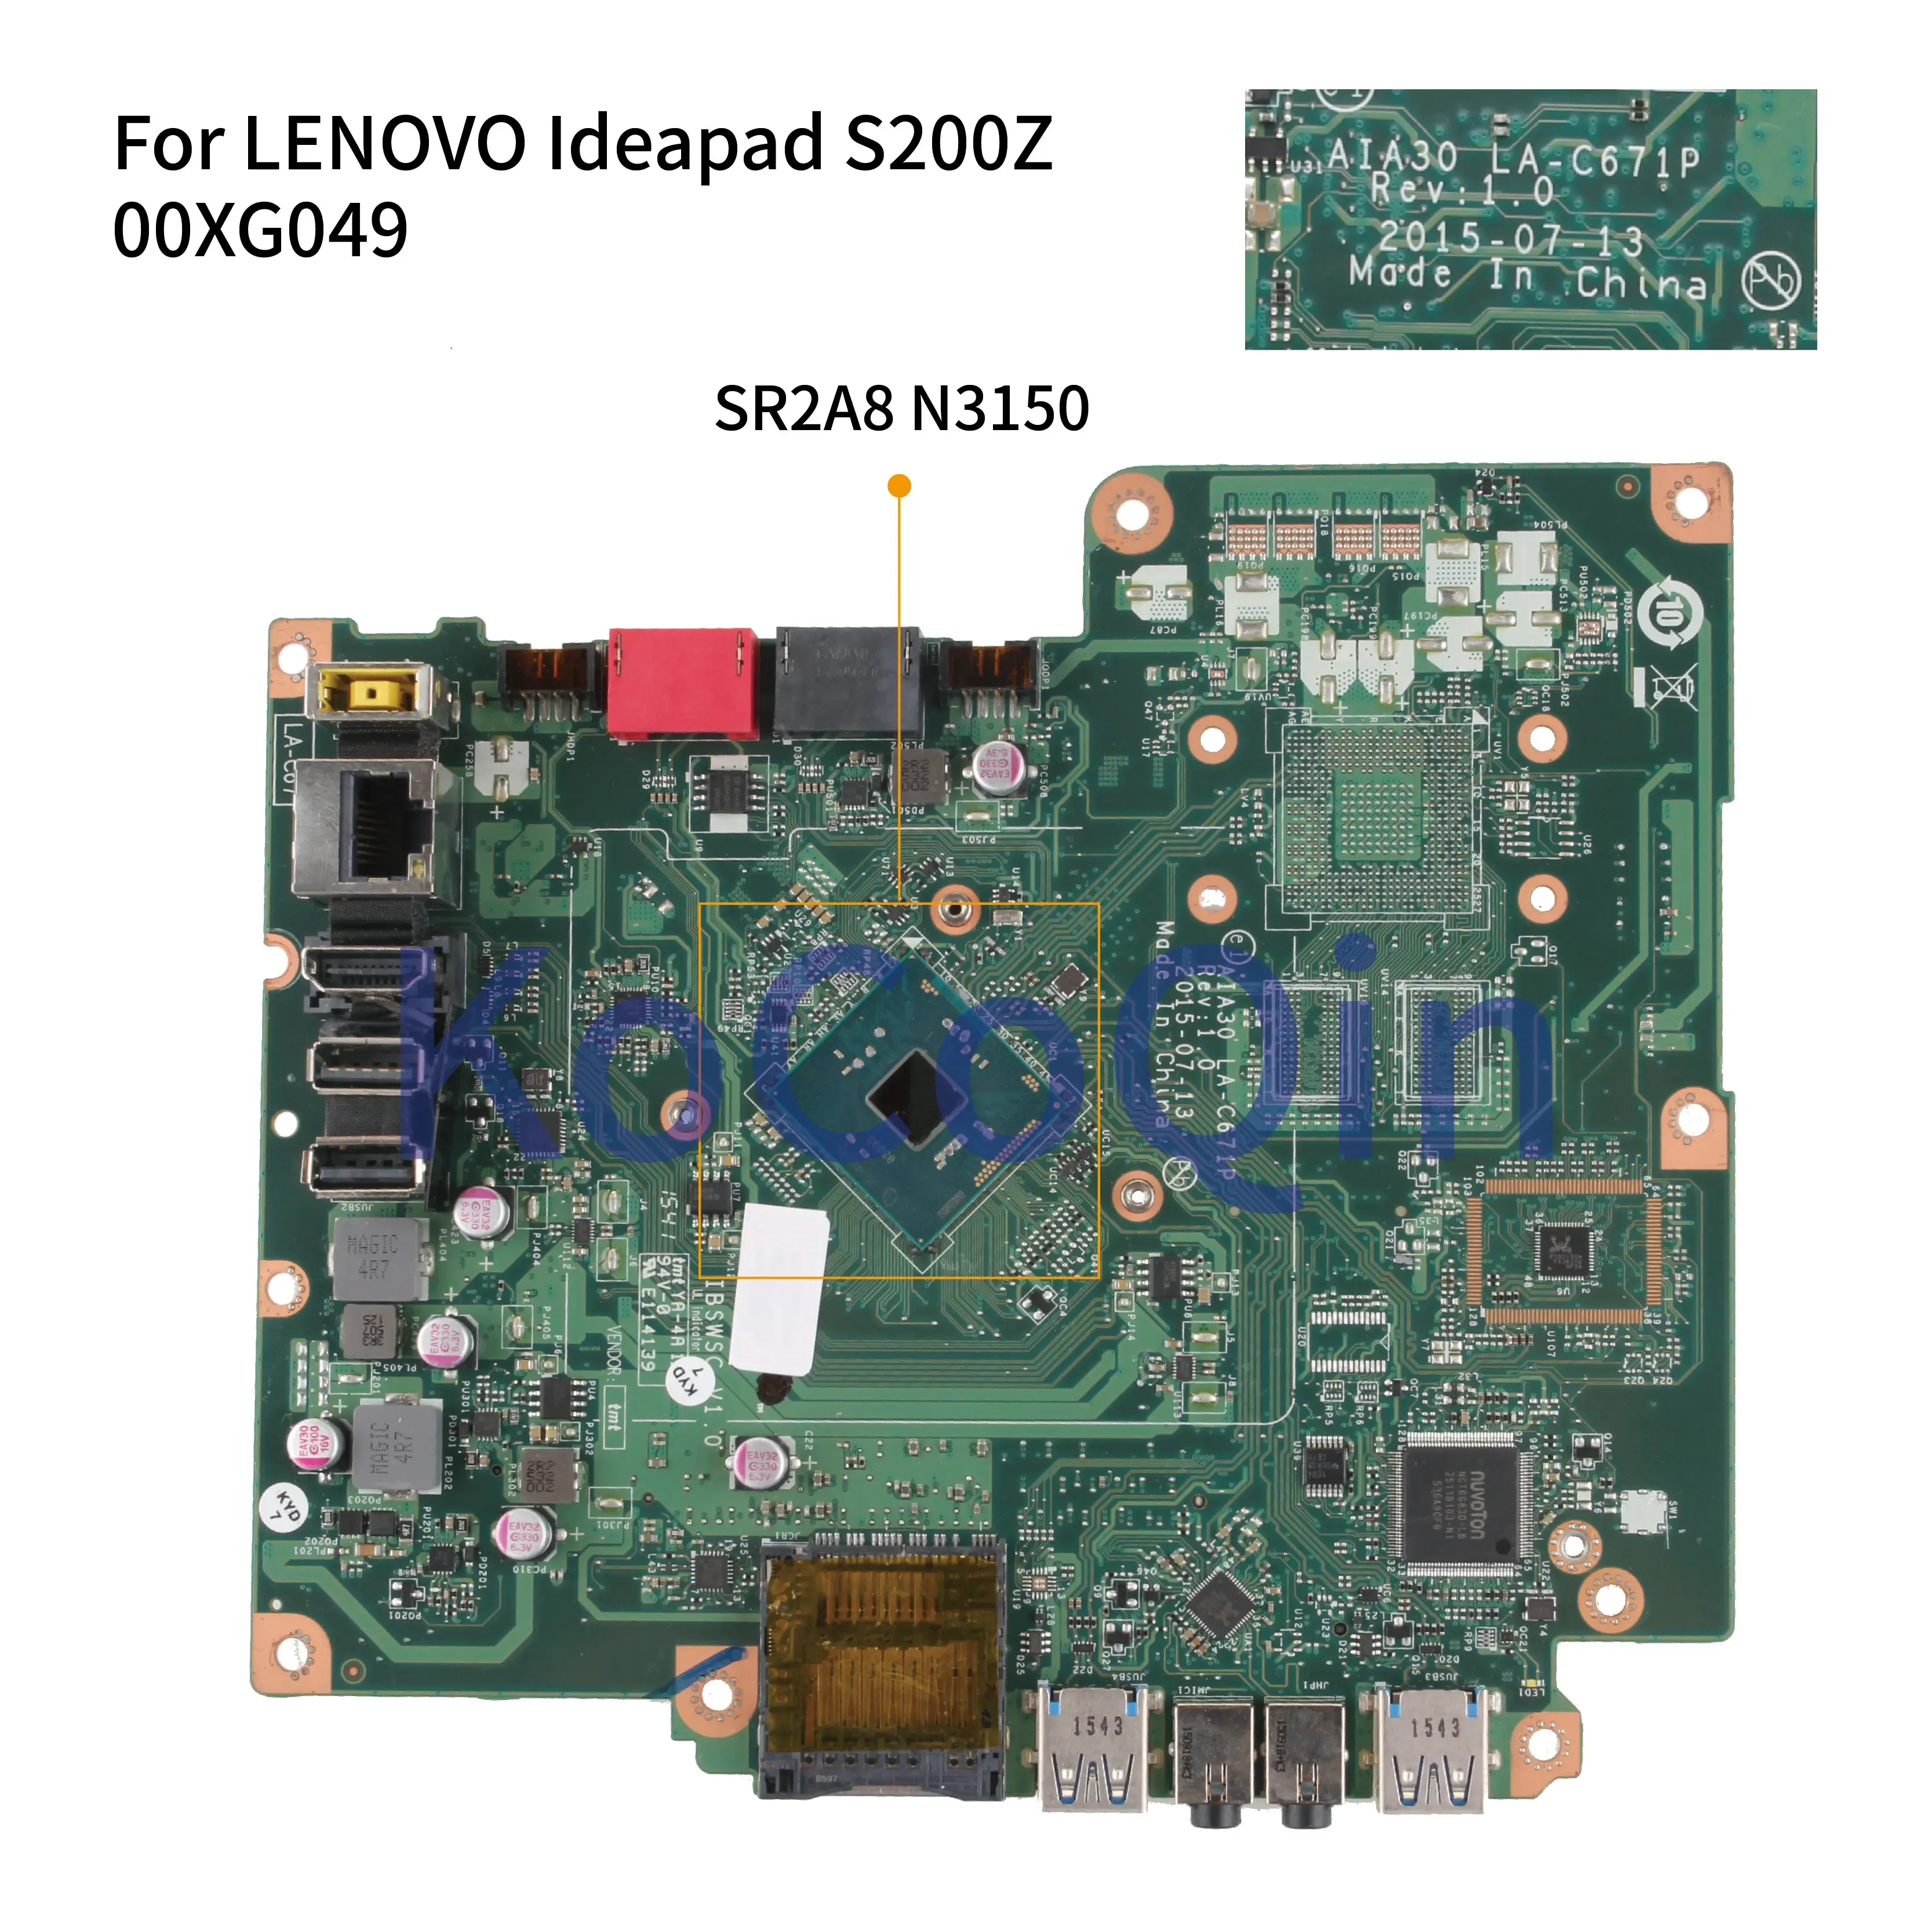 Moderkort Kocoqin Laptop Motherboard för Lenovo IdeaPad S200Z C2000 AIO Mainboard 00XG049 IBSWSC AIA30 LAC671P SR2A8 N3150 CPU